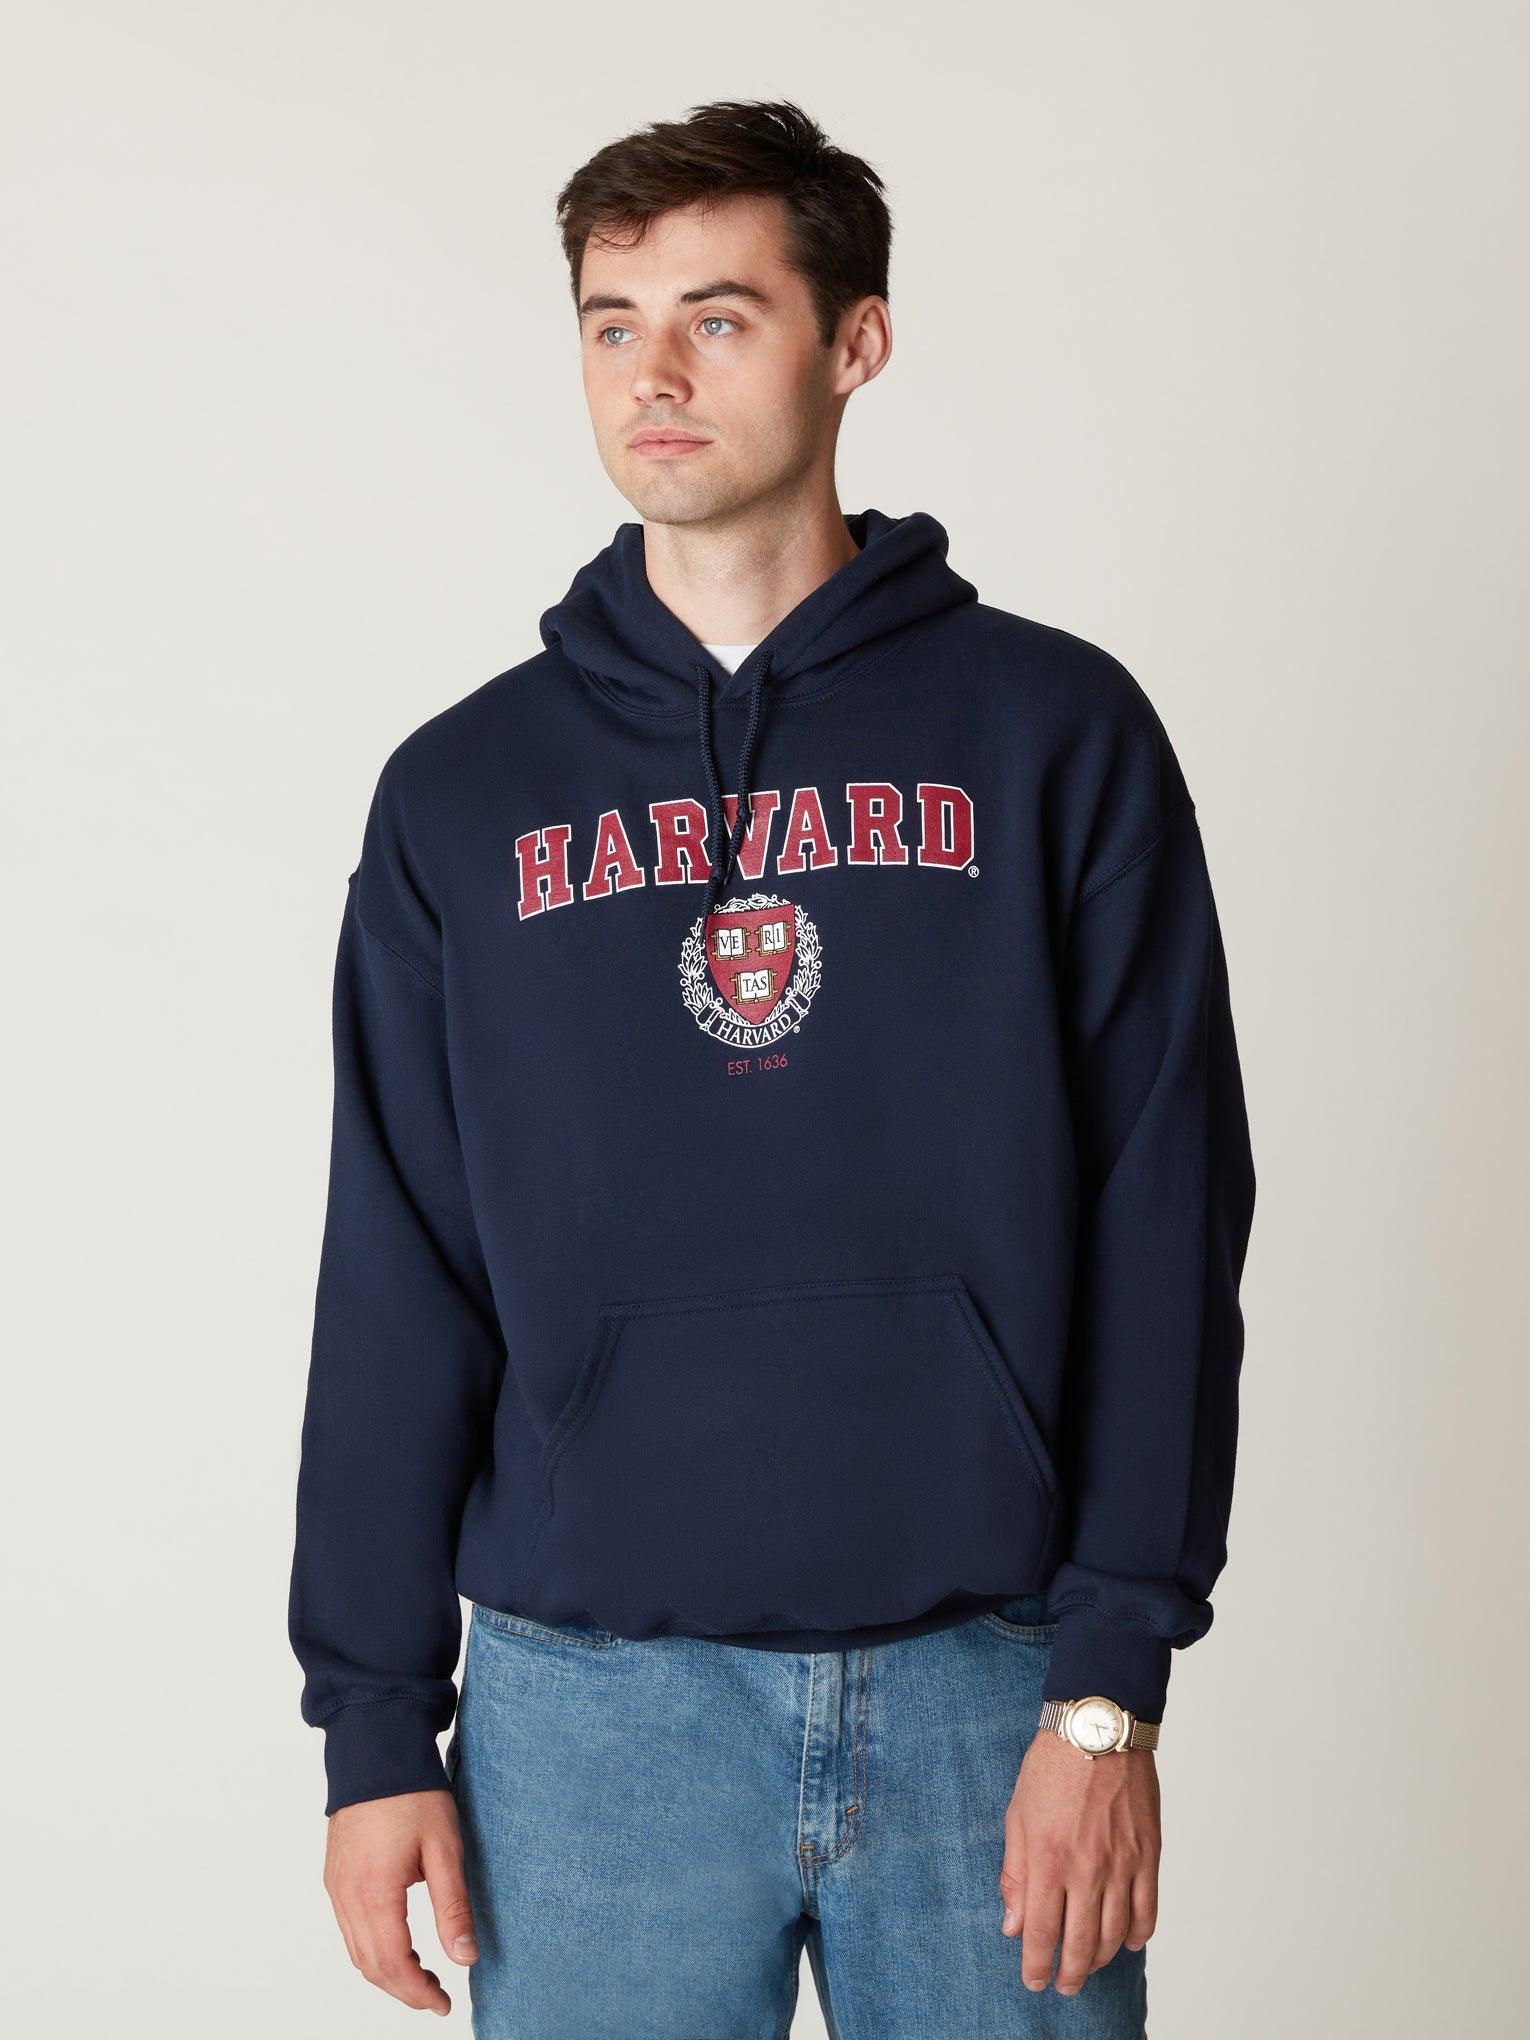 Harvard Crest – The Sweatshirt Harvard Hooded Shop